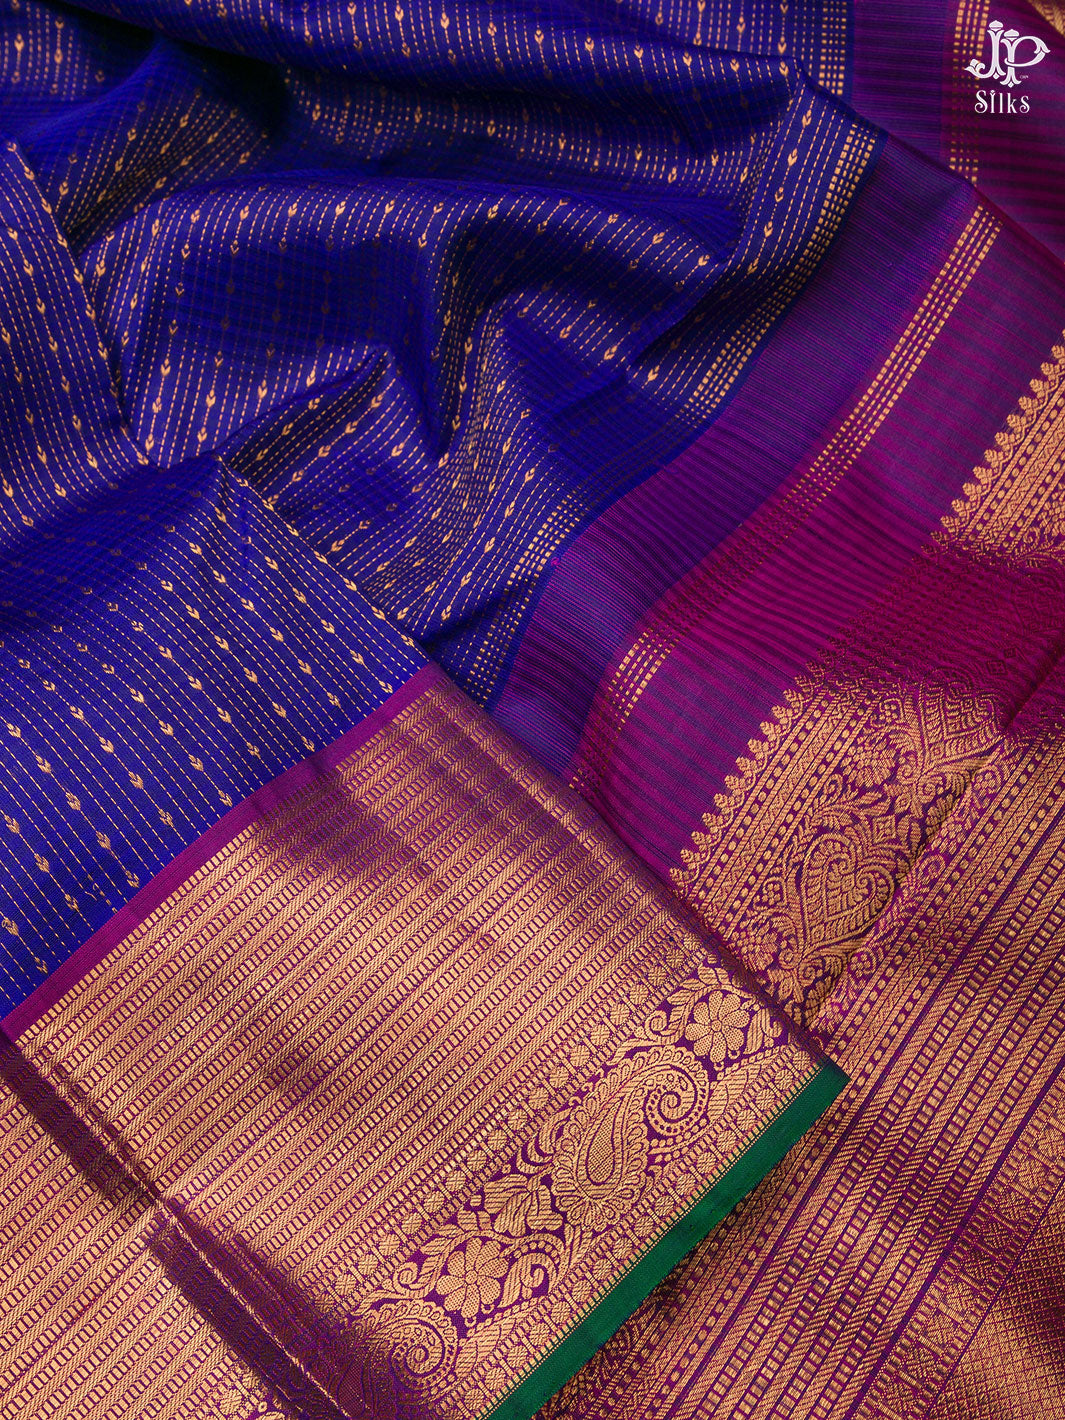 Teal and Violet Kanchipuram Silk Saree - D8180 - View 2